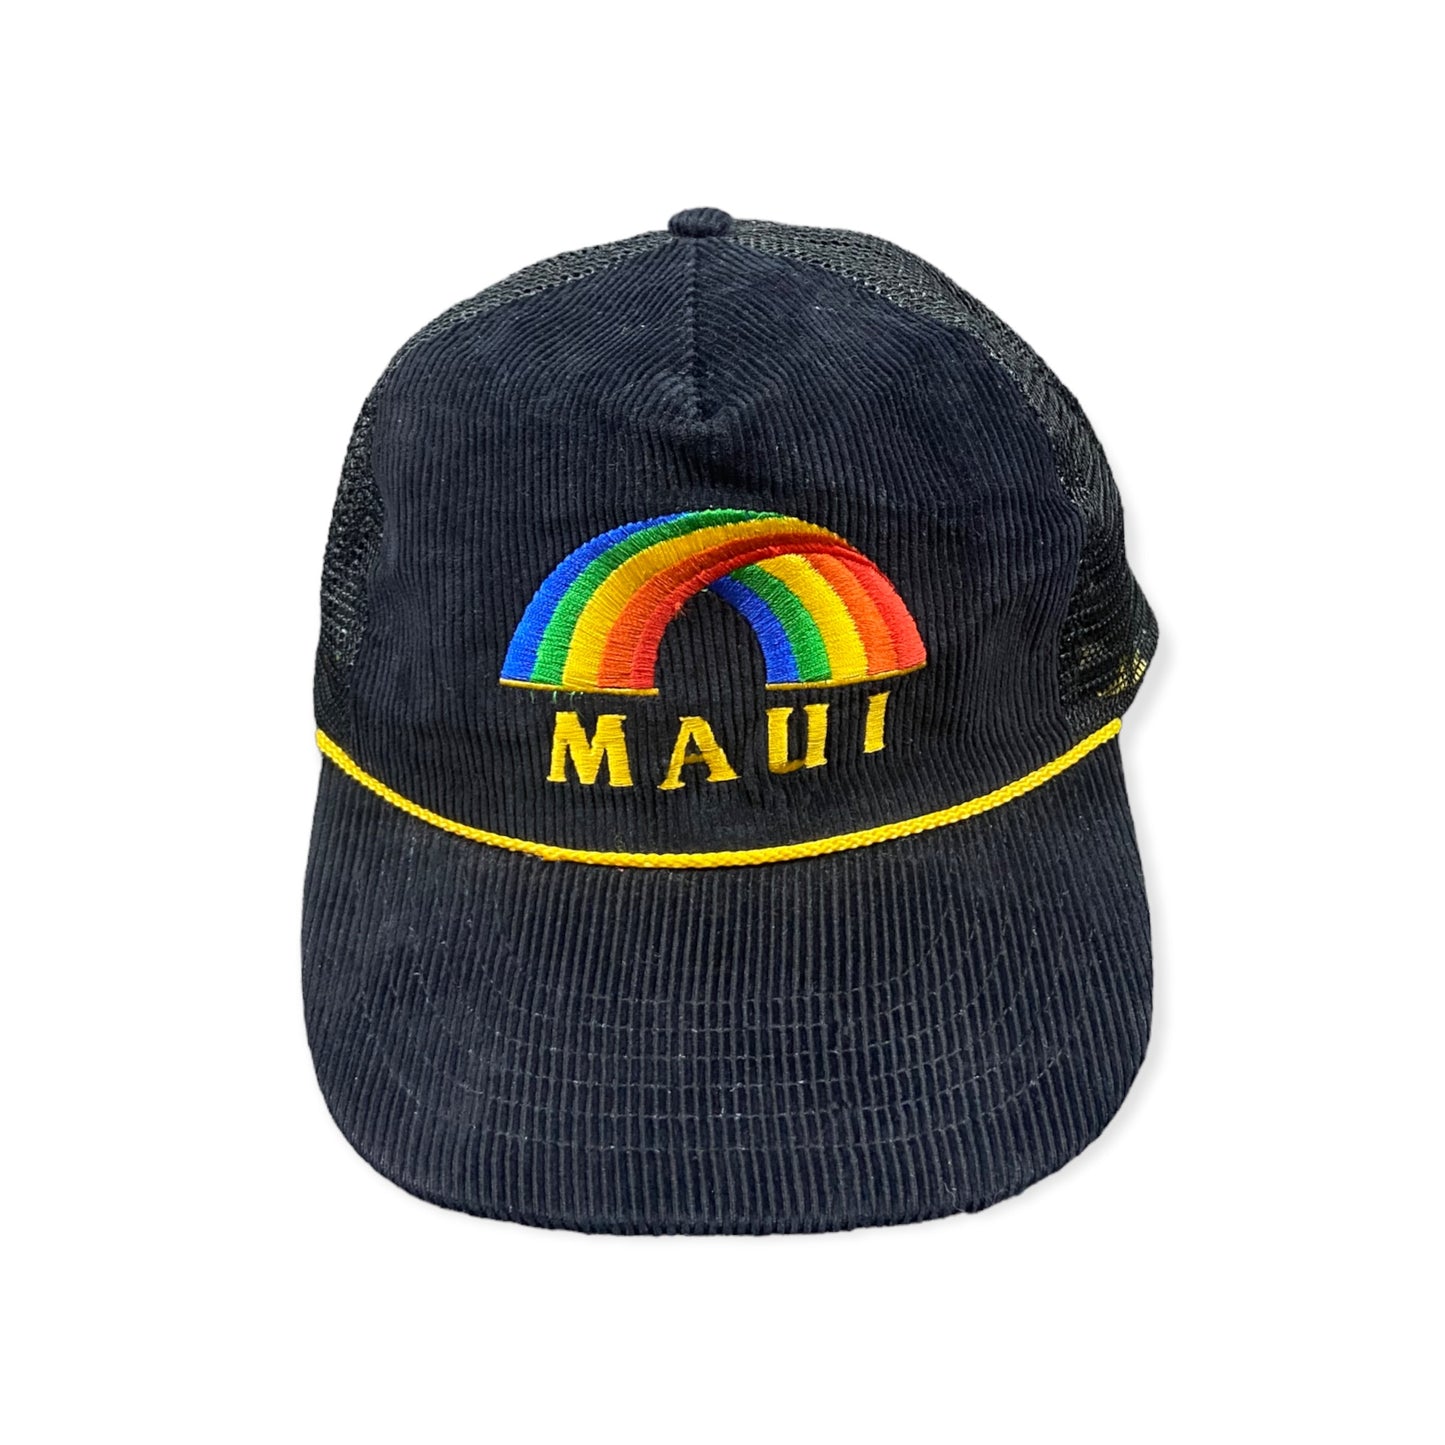 Maui Corduroy Mesh Trucker Cap